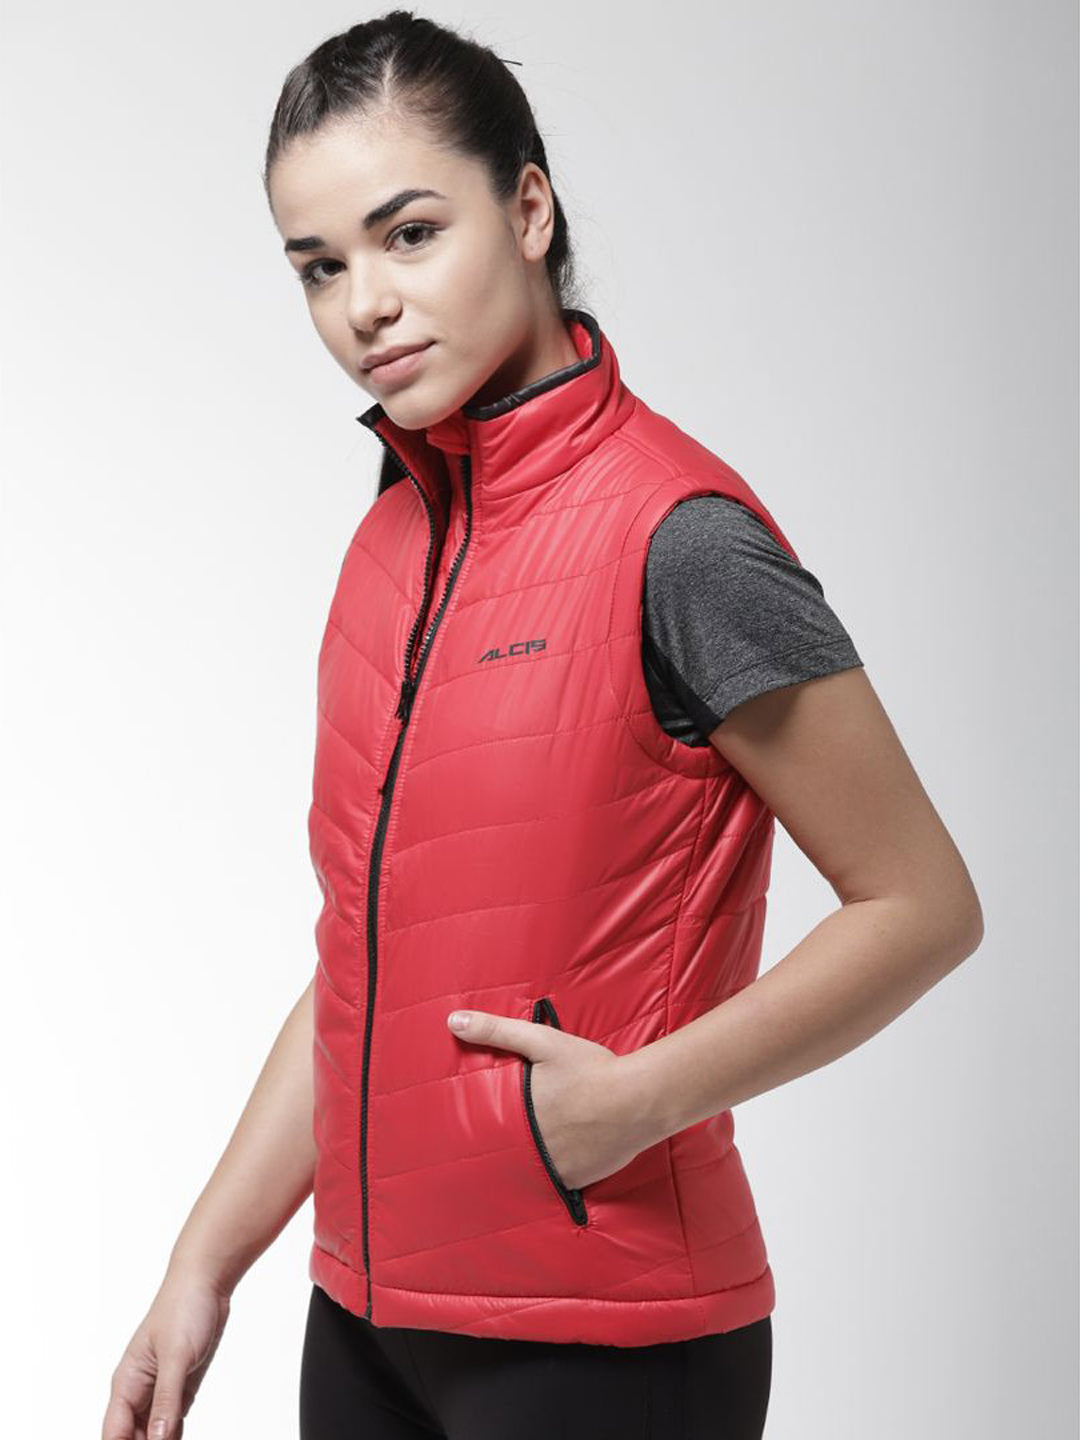 Alcis Womens Red Training Jacket WJKQ03-S